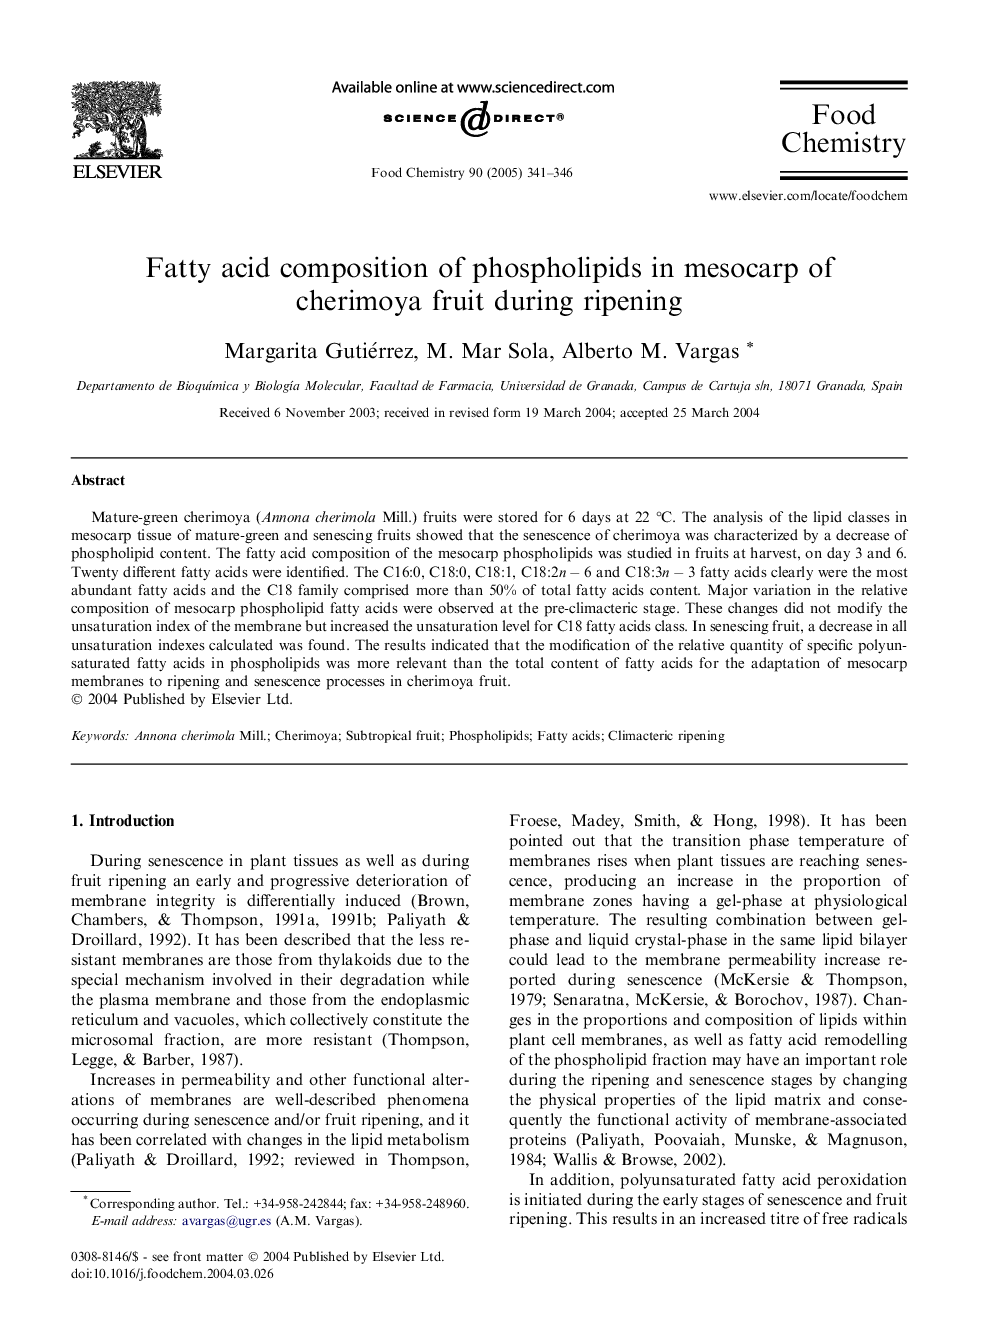 Fatty acid composition of phospholipids in mesocarp of cherimoya fruit during ripening